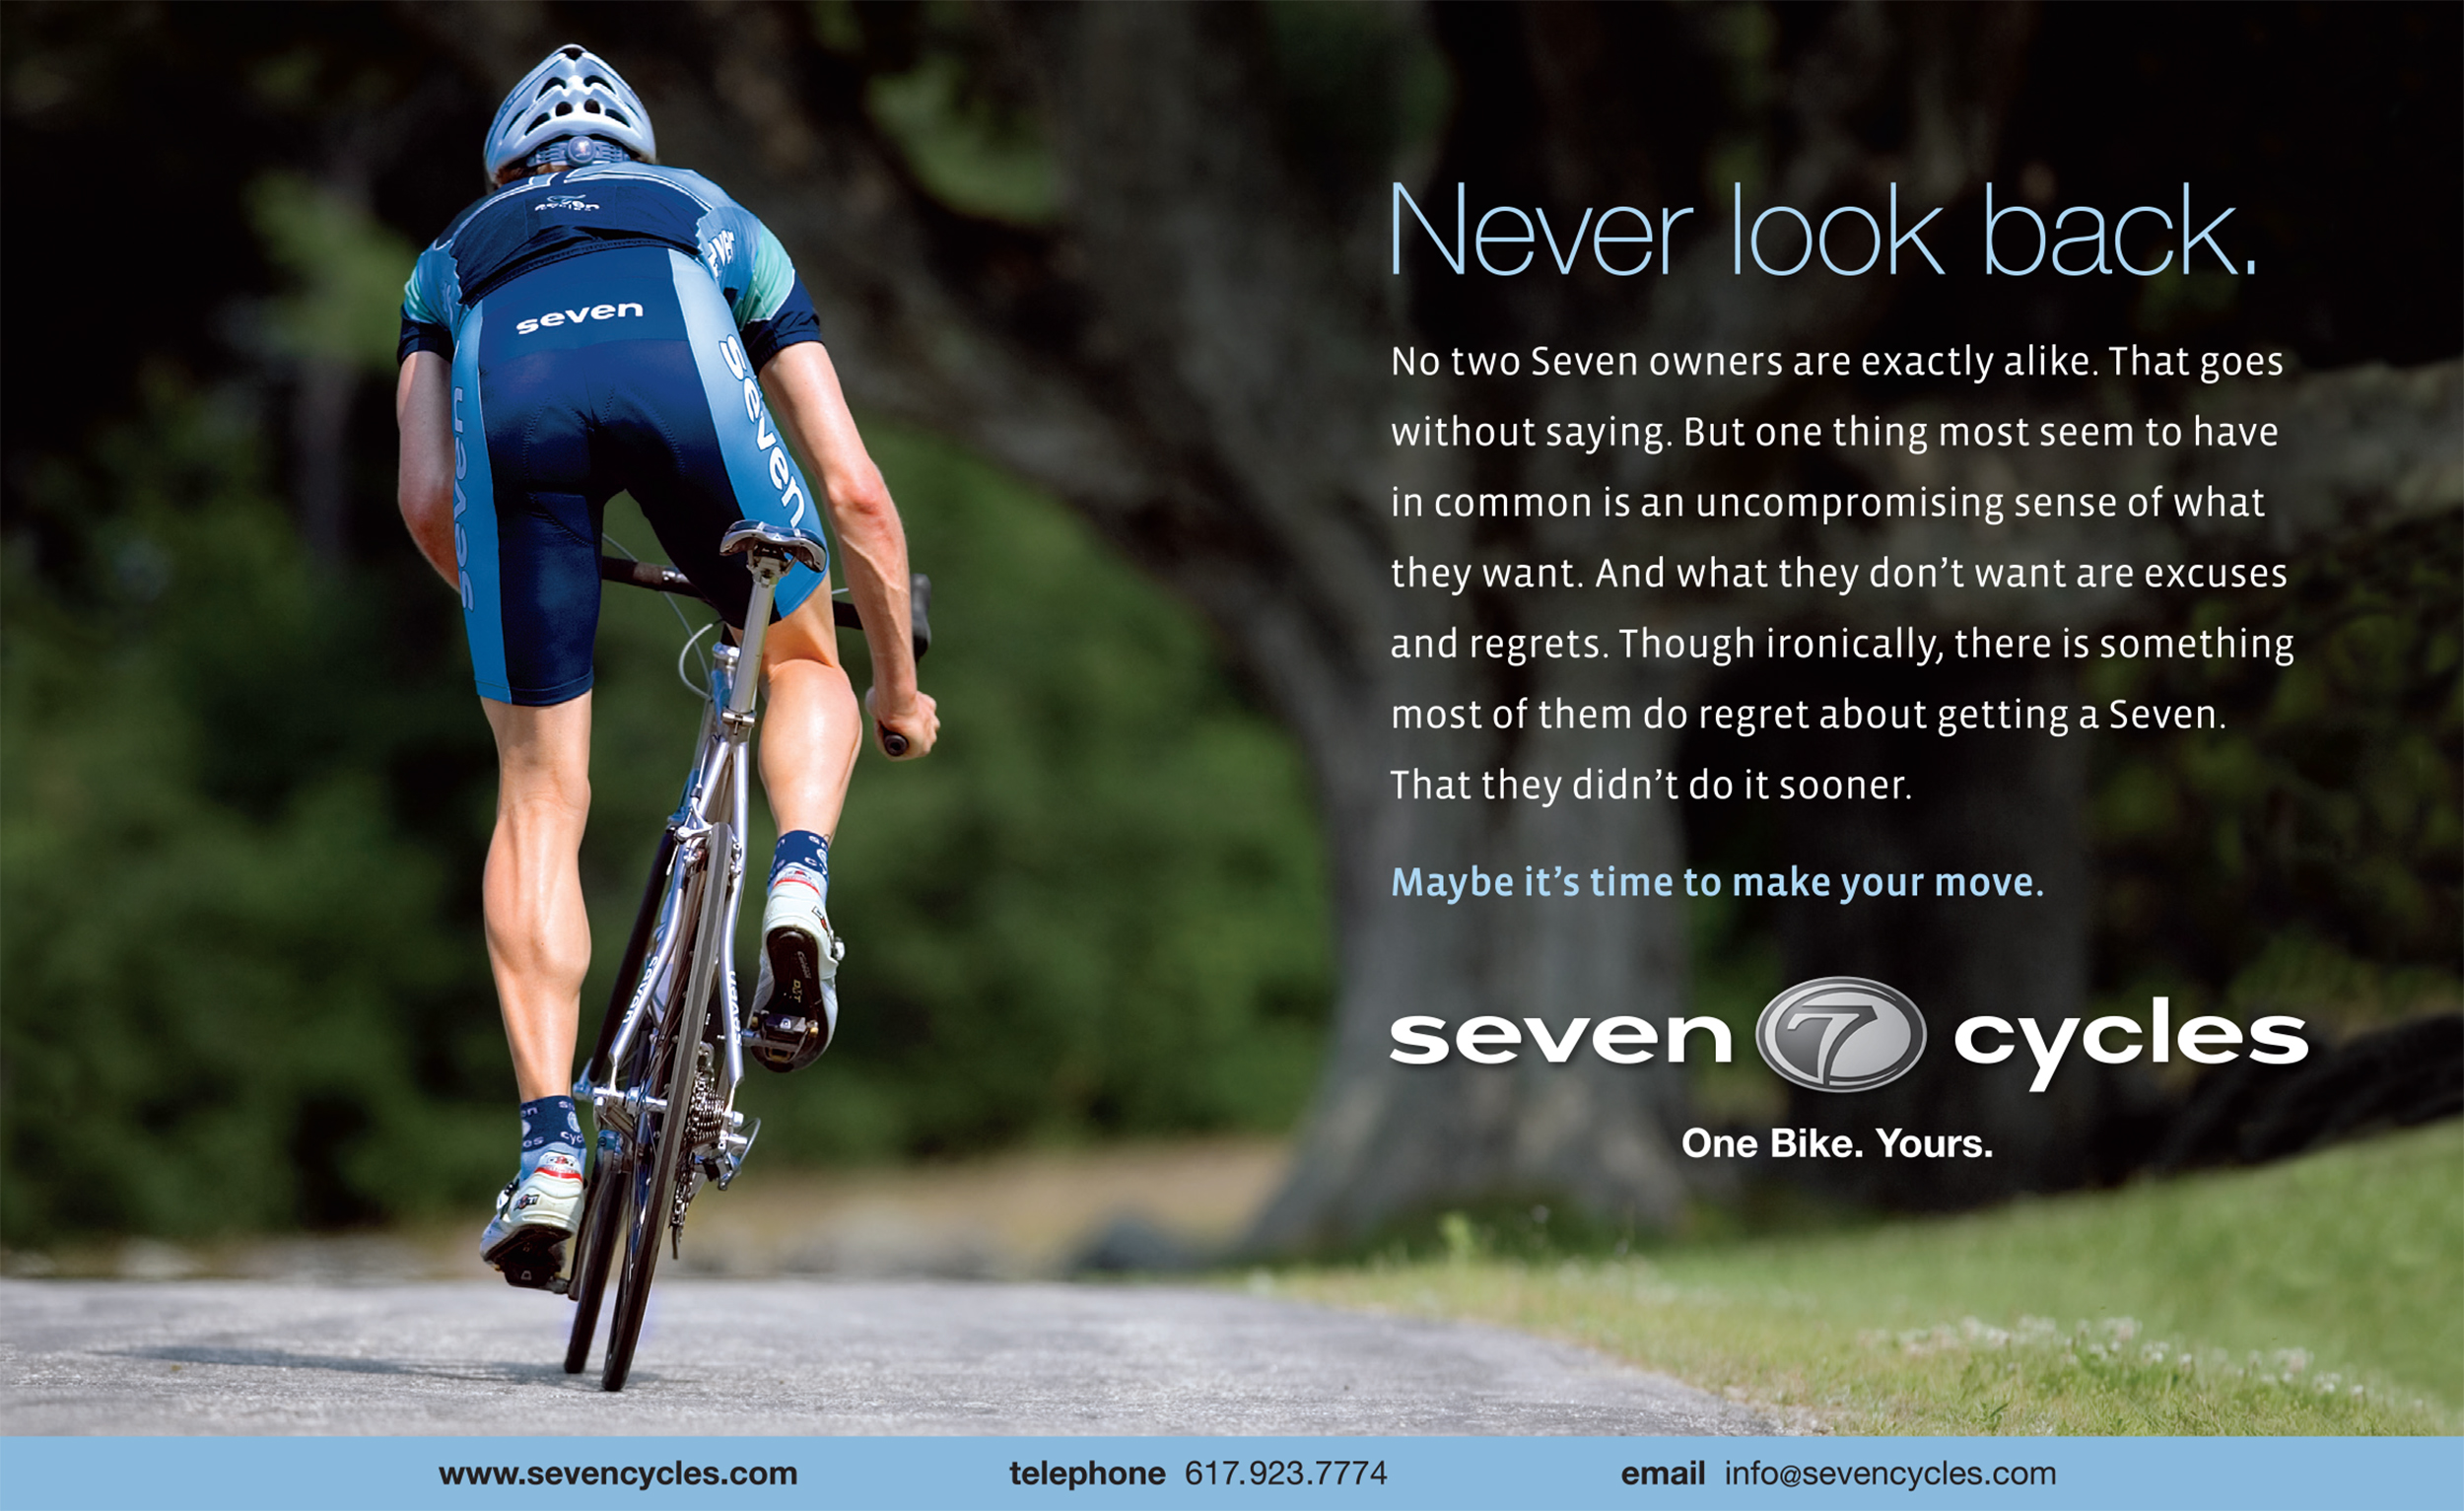   Seven Cycles Ad Campaign  • designer/director: Michael Balint • assistant designer: Dawn Vietro • photo: Chris Milliman • copy: Jennifer Miller  &nbsp; 